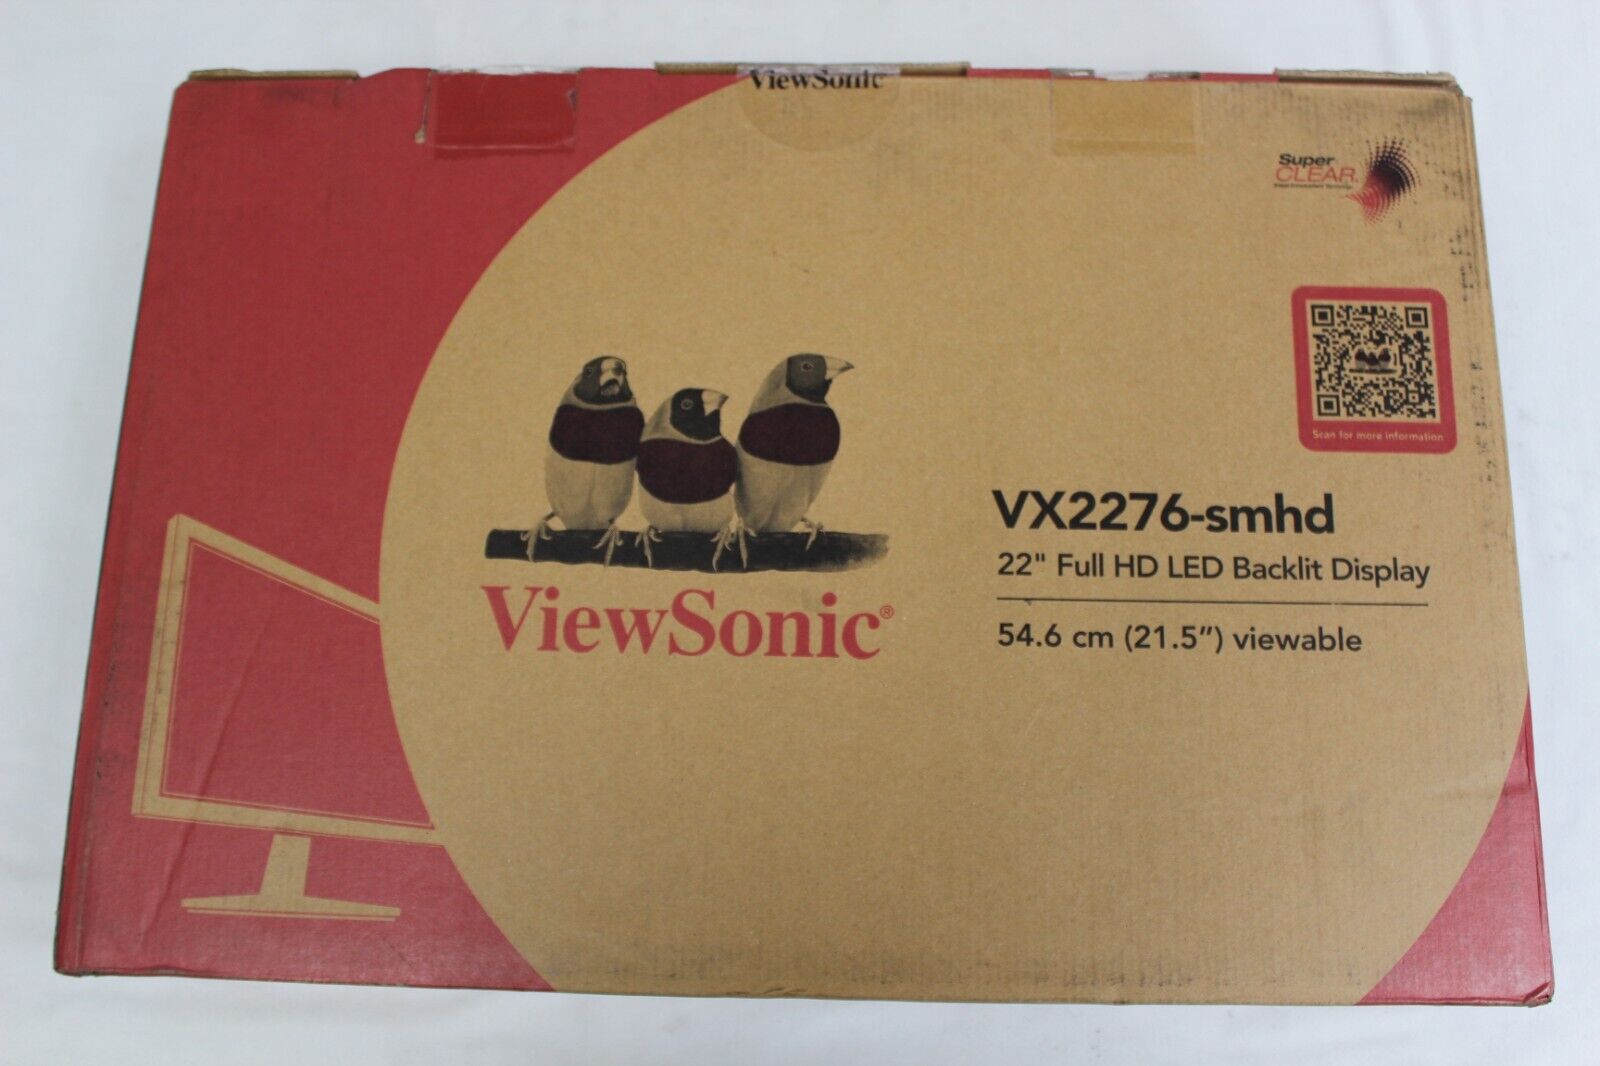 ViewSonic VX2276 -smhd 22